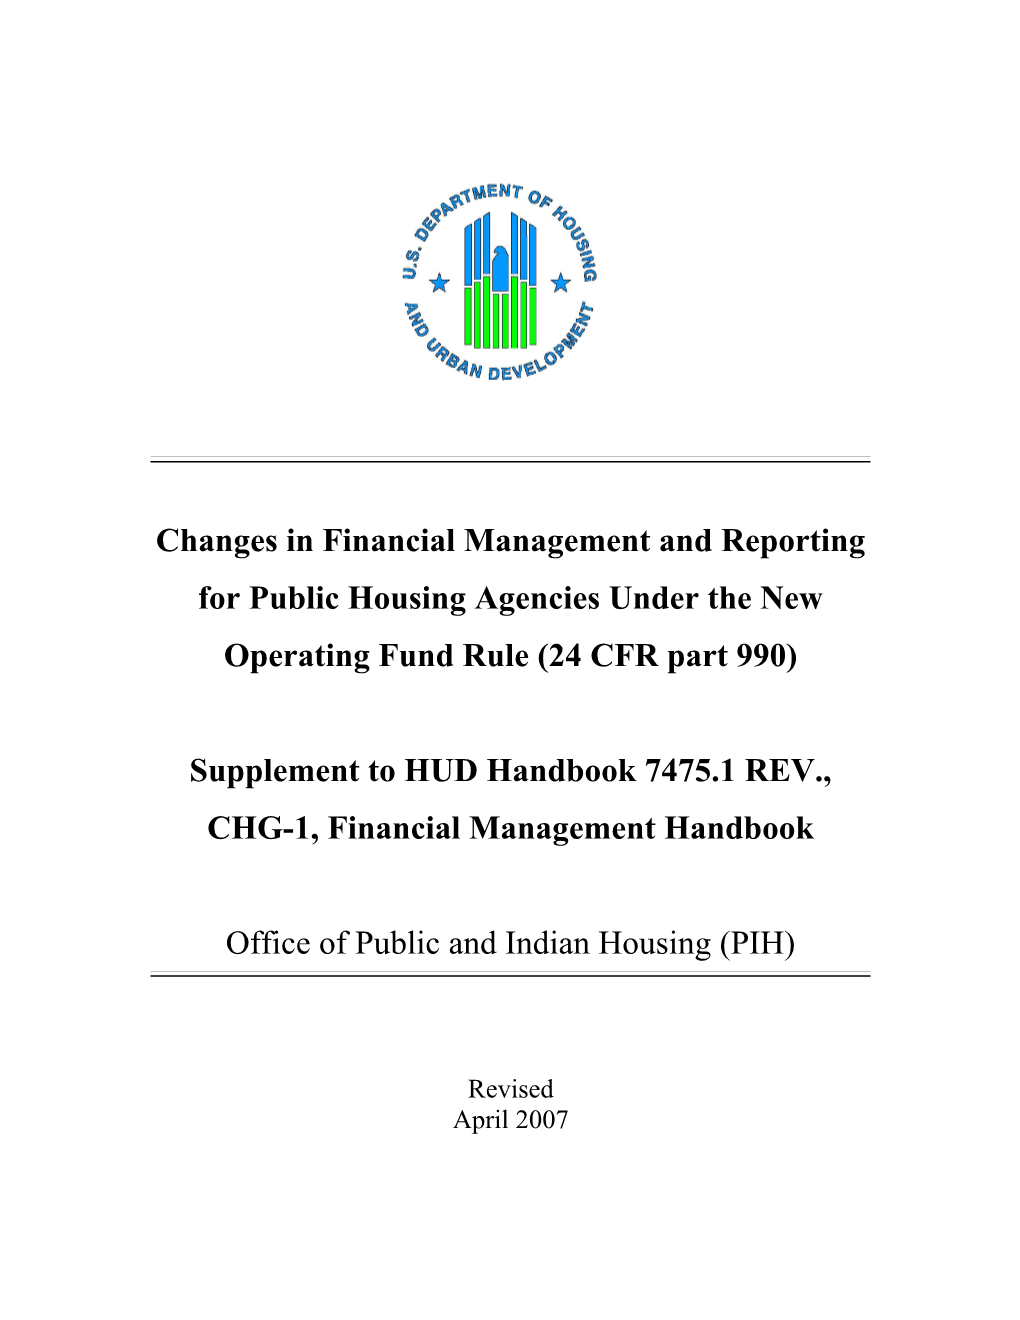 Supplement to HUD Handbook 7475.1 REV., CHG-1, Financial Management Handbook